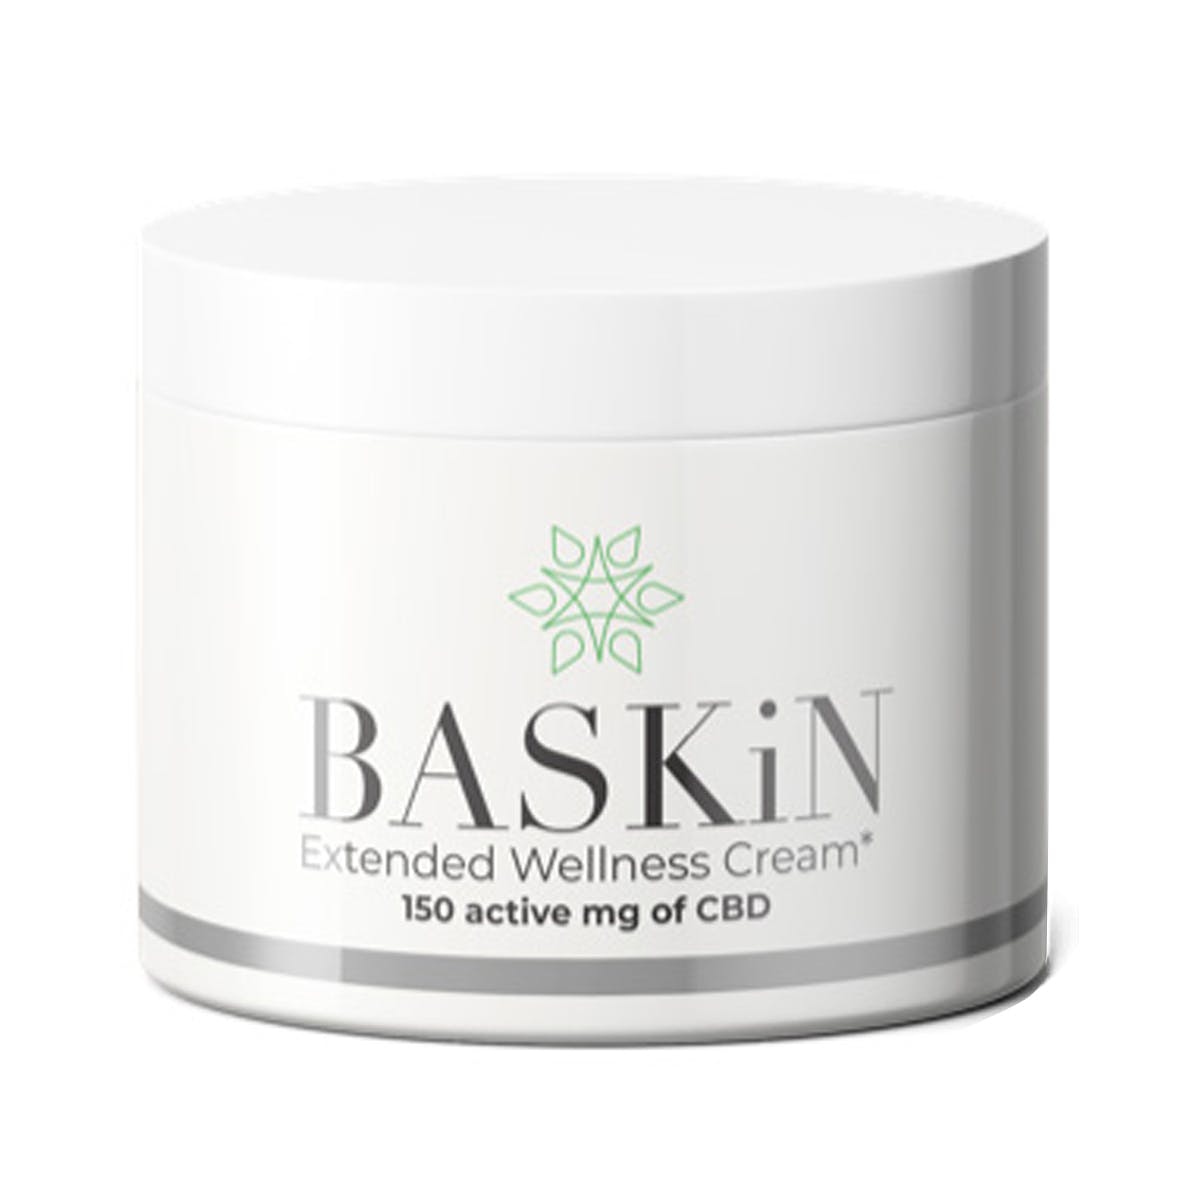 topicals-baskin-essentials-baskin-extended-wellness-cream-a-c2-80-c2-93-150mg-active-cbd